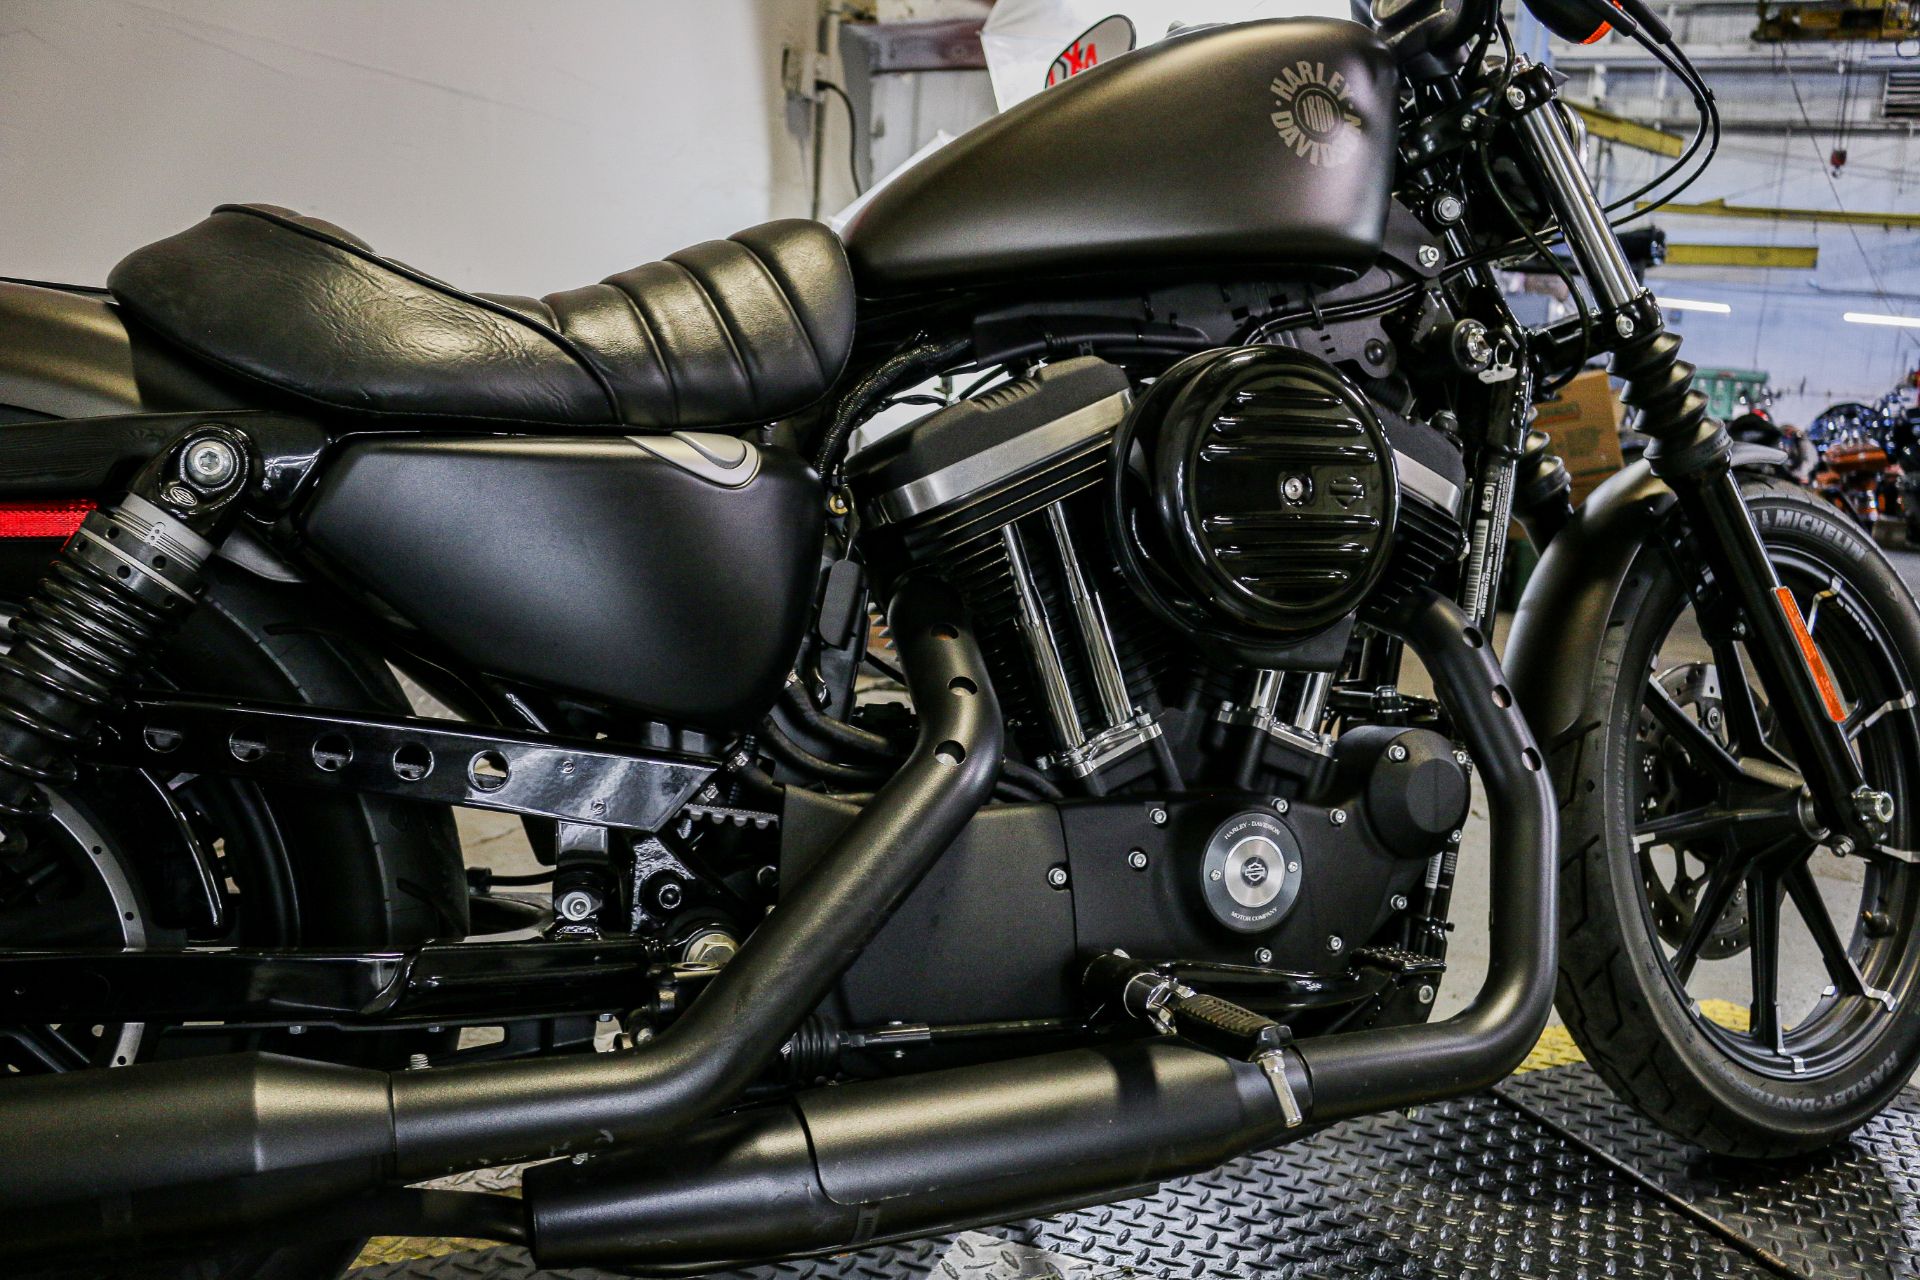 2021 Harley-Davidson Iron 883™ in Sacramento, California - Photo 8